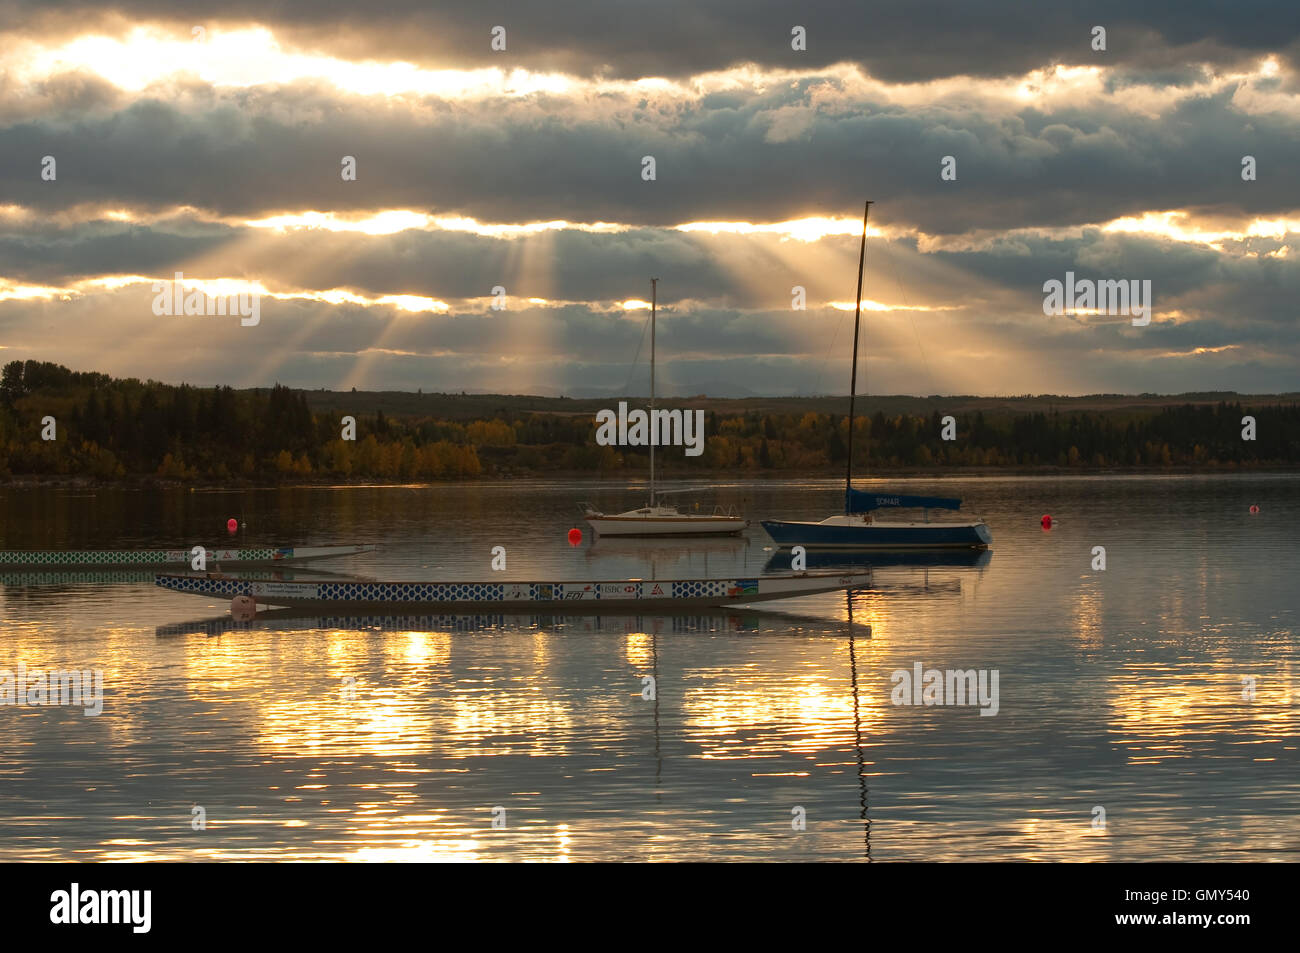 Boats on the Glenmore Reservoir in Calgary Alberta Canada Stock Photo